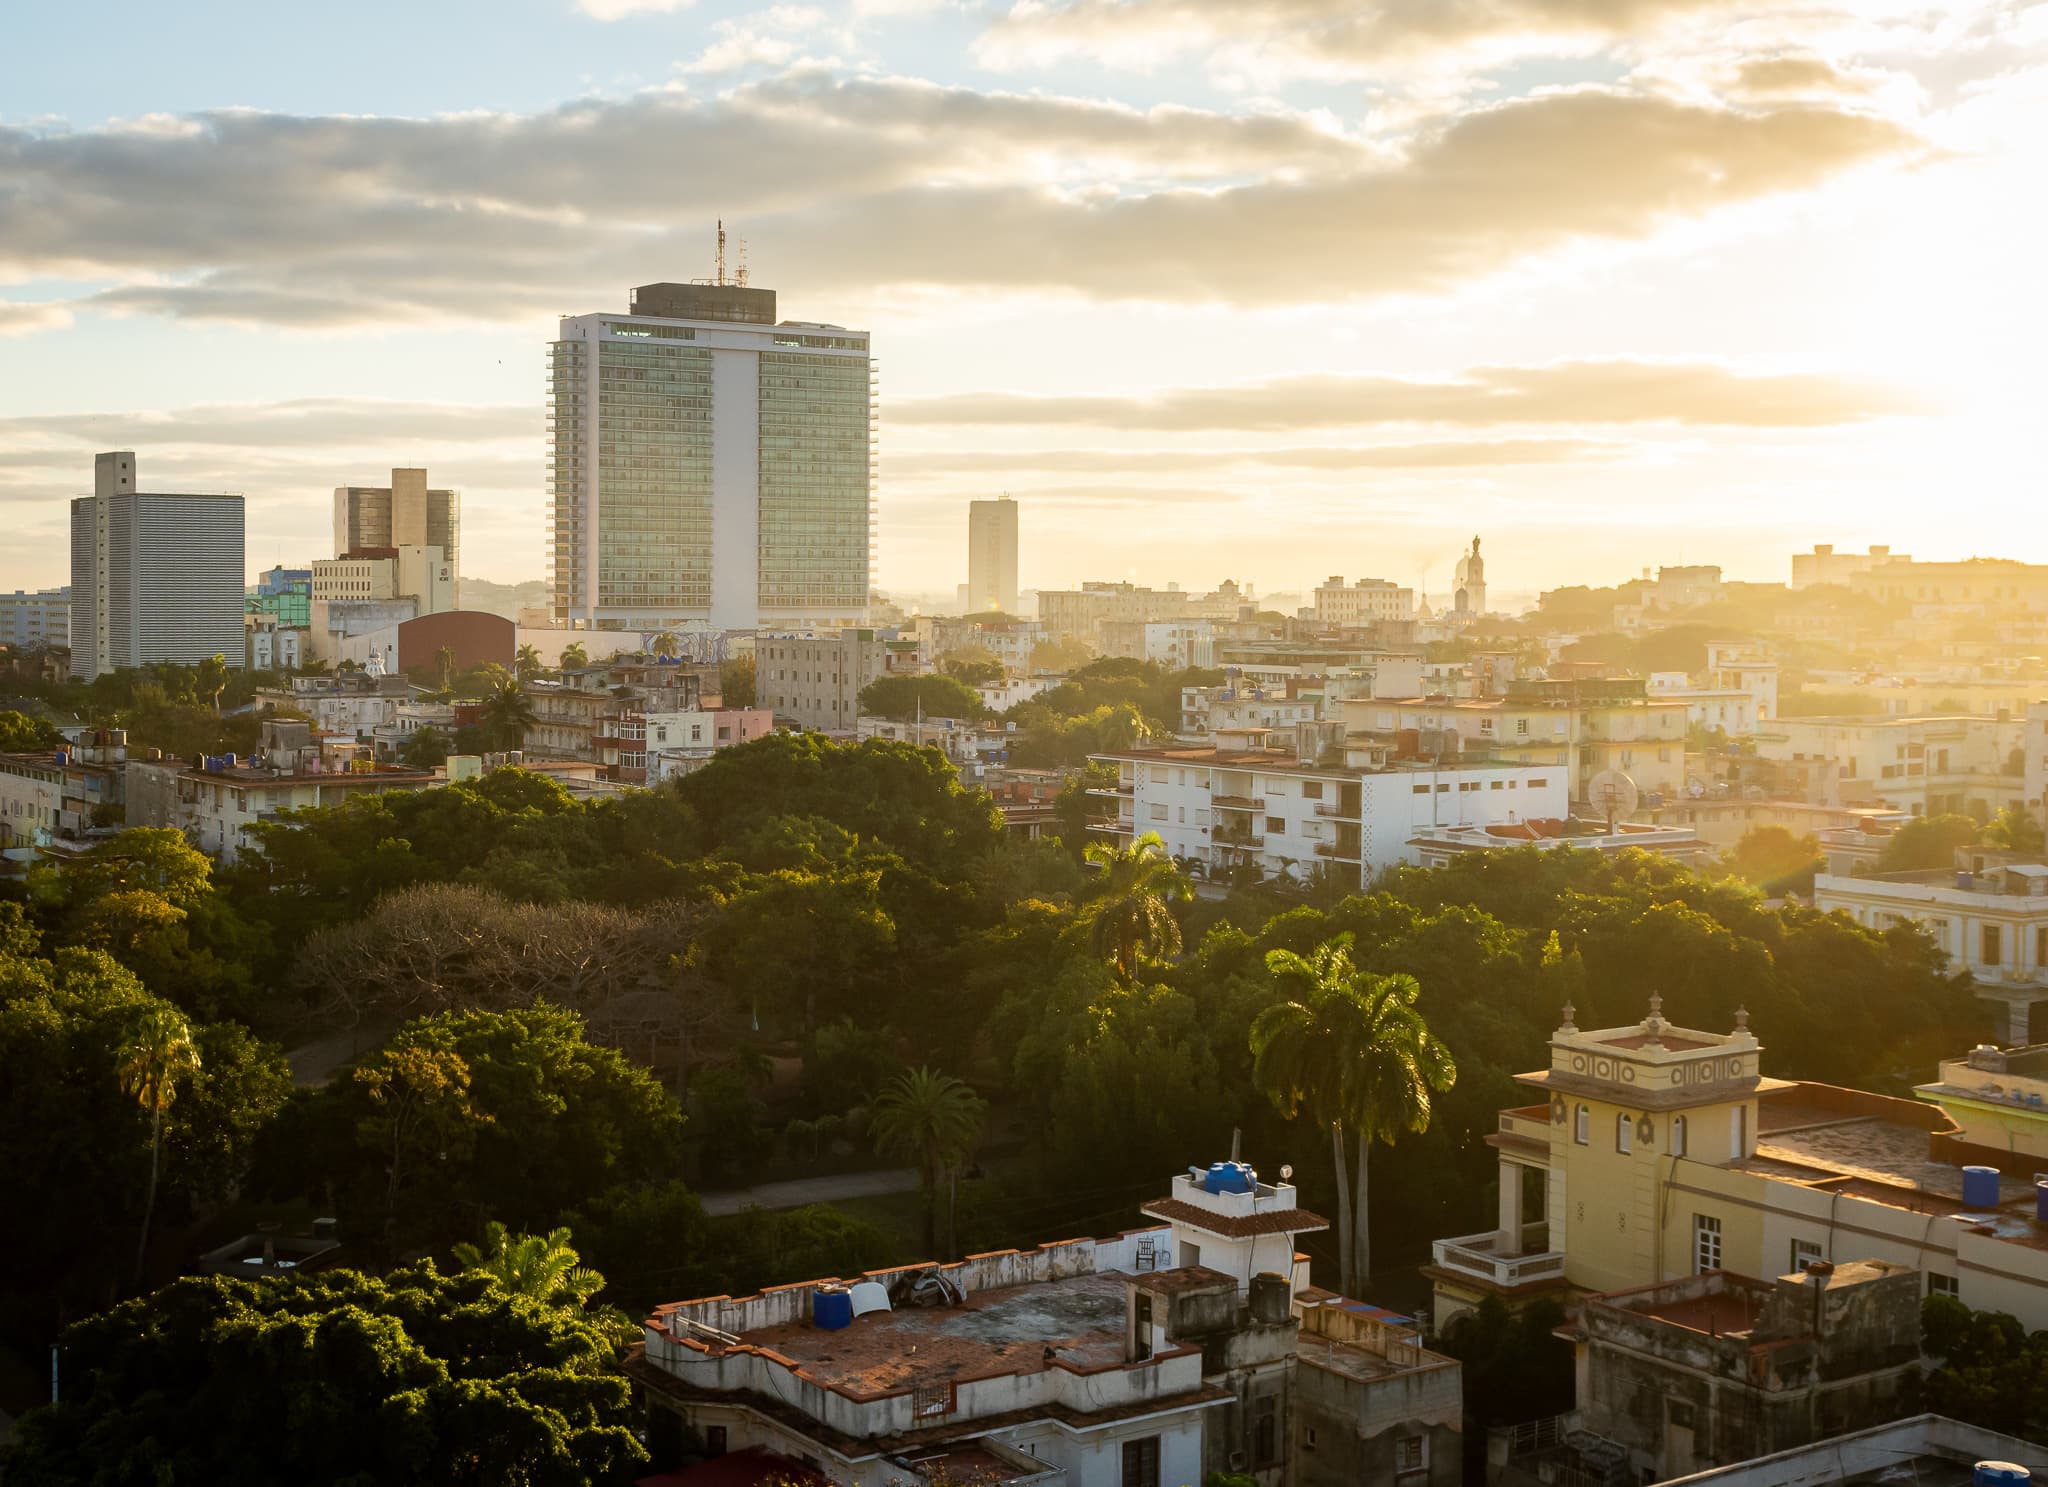 Photos of Havana